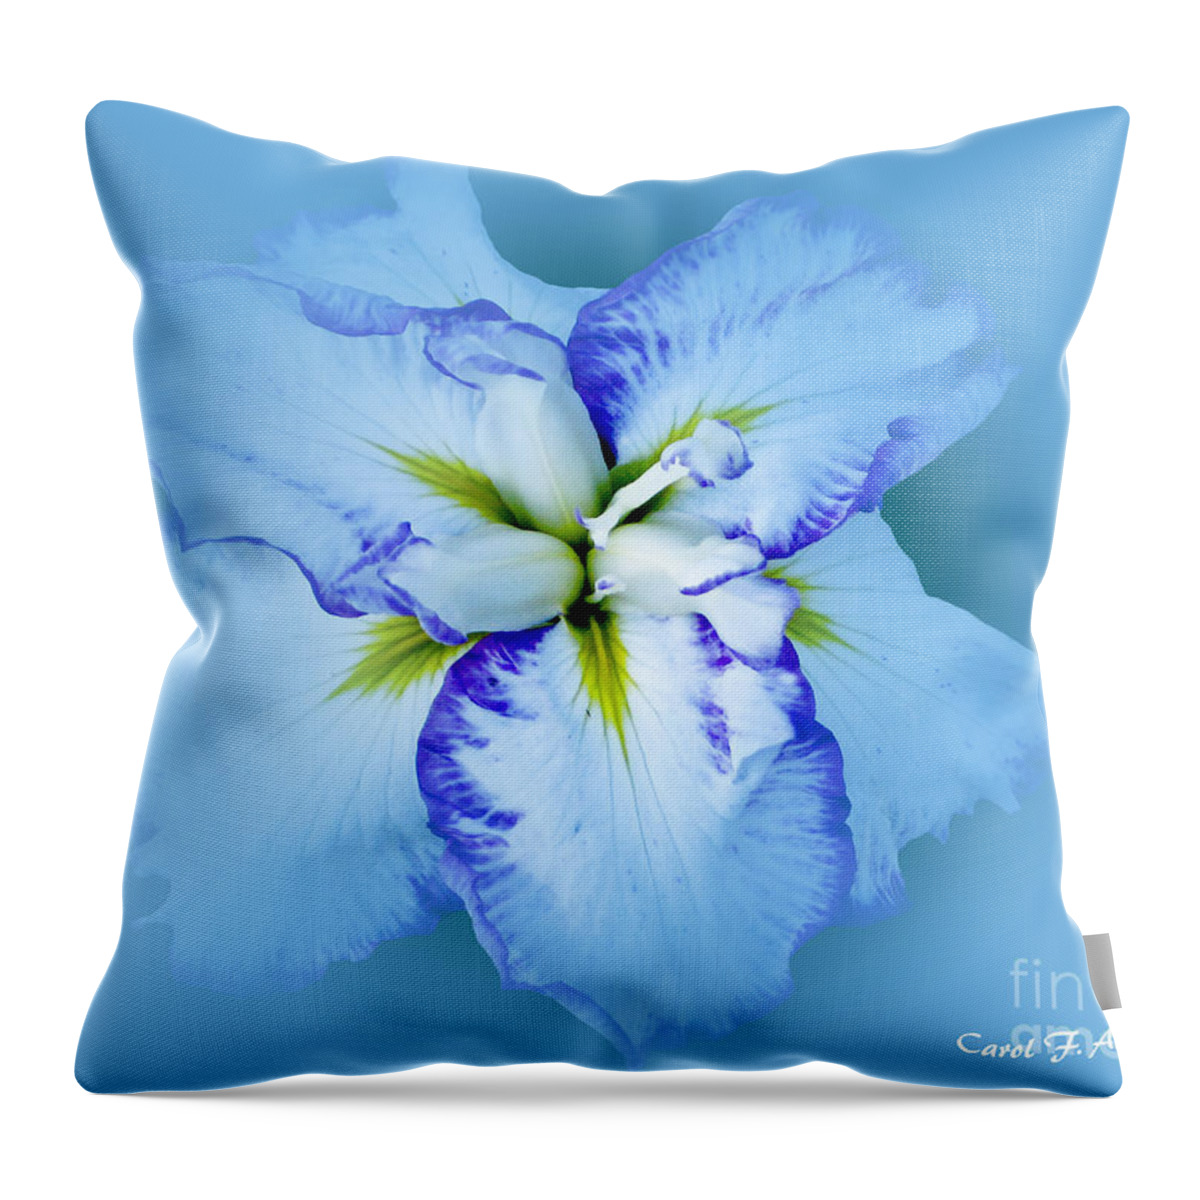 Iris Throw Pillow featuring the photograph Iris in Blue by Carol F Austin